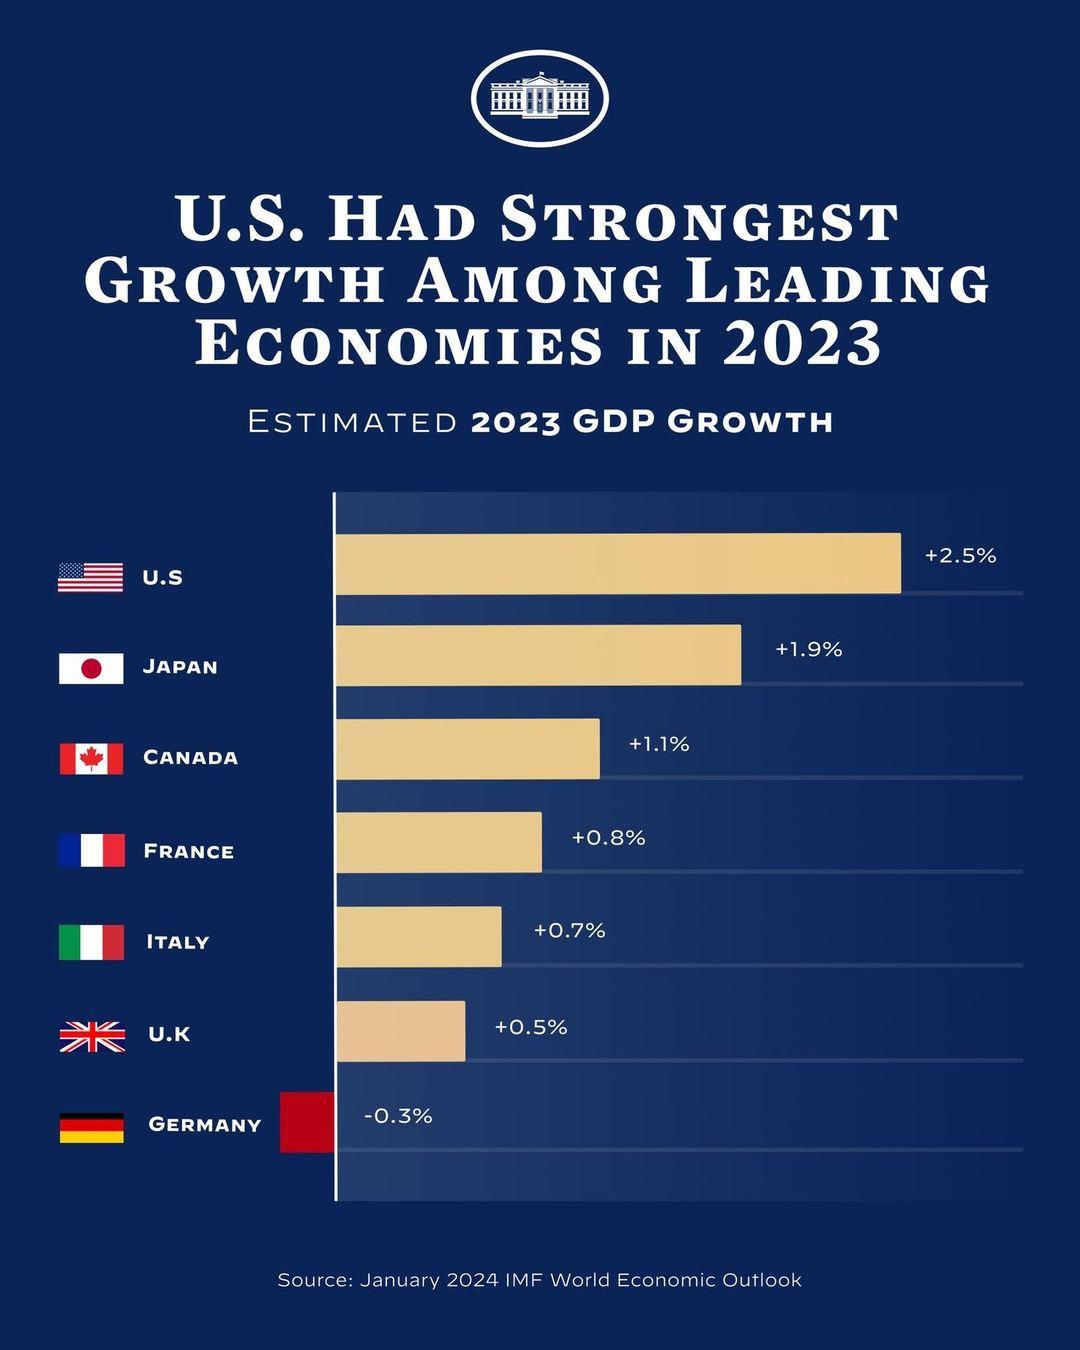 Big News: The U.S. had the strongest economic growth among leading economies in 2023.